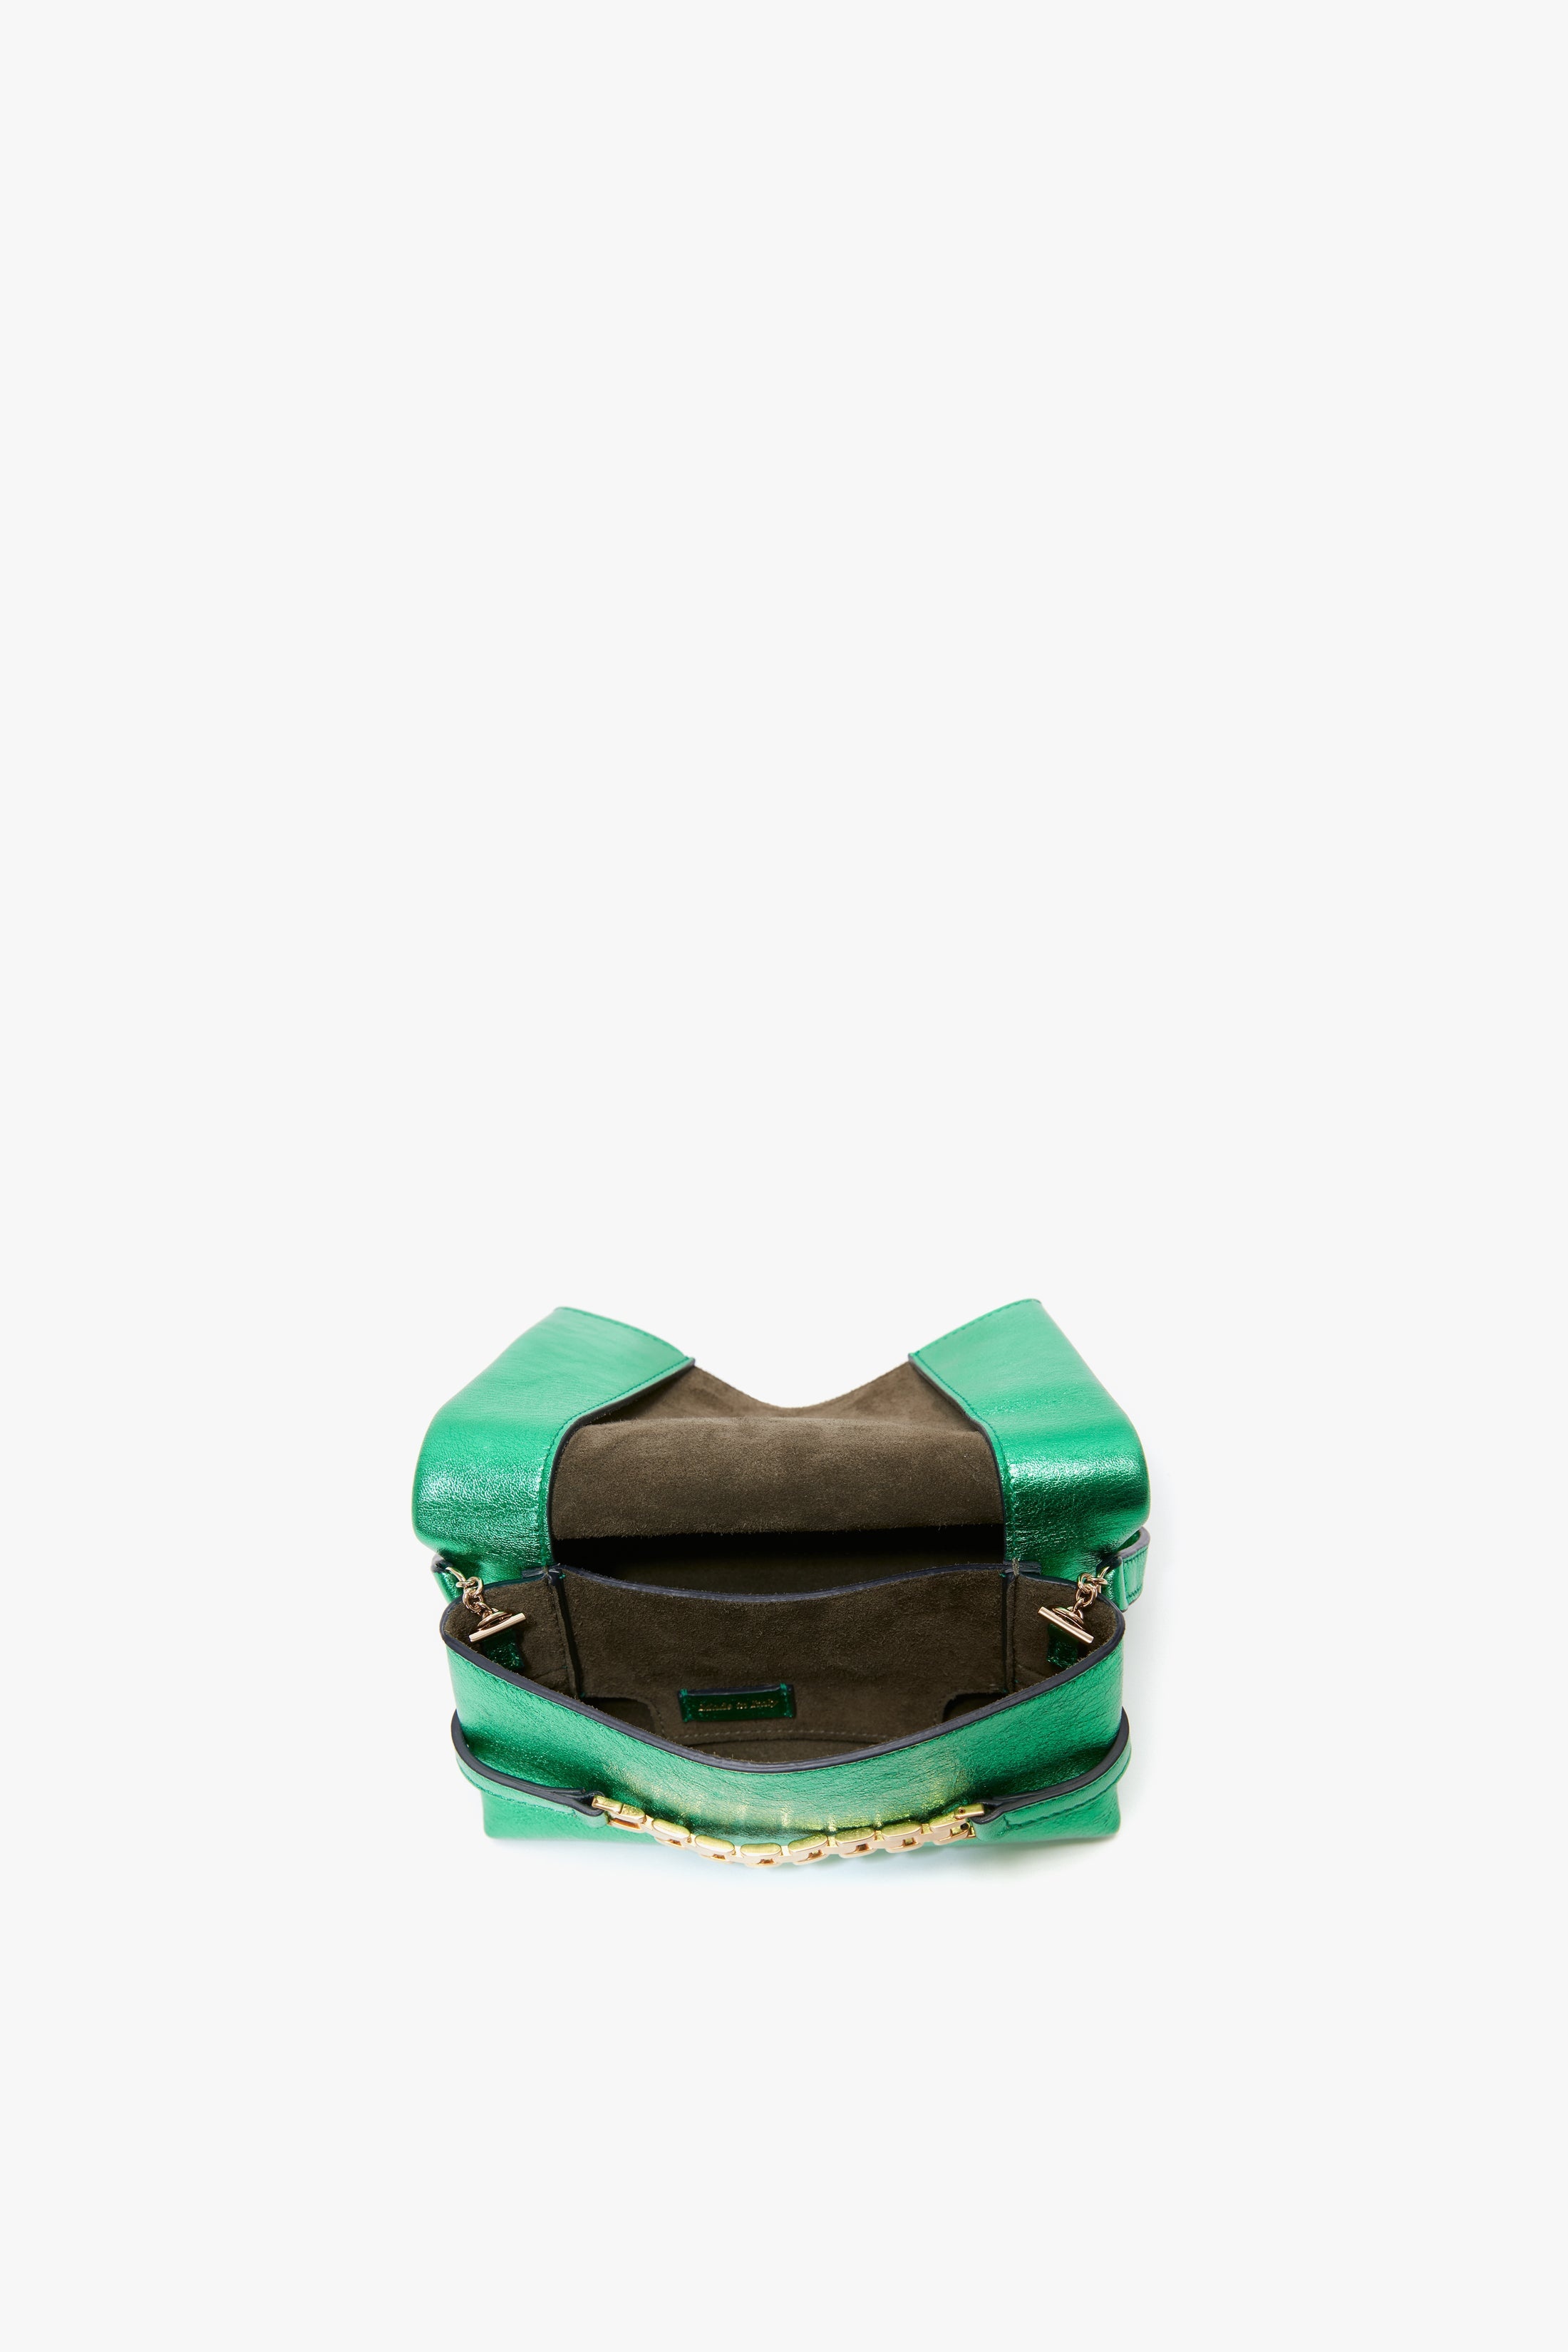 Mini Chain Pouch In Metallic Green Leather - 3